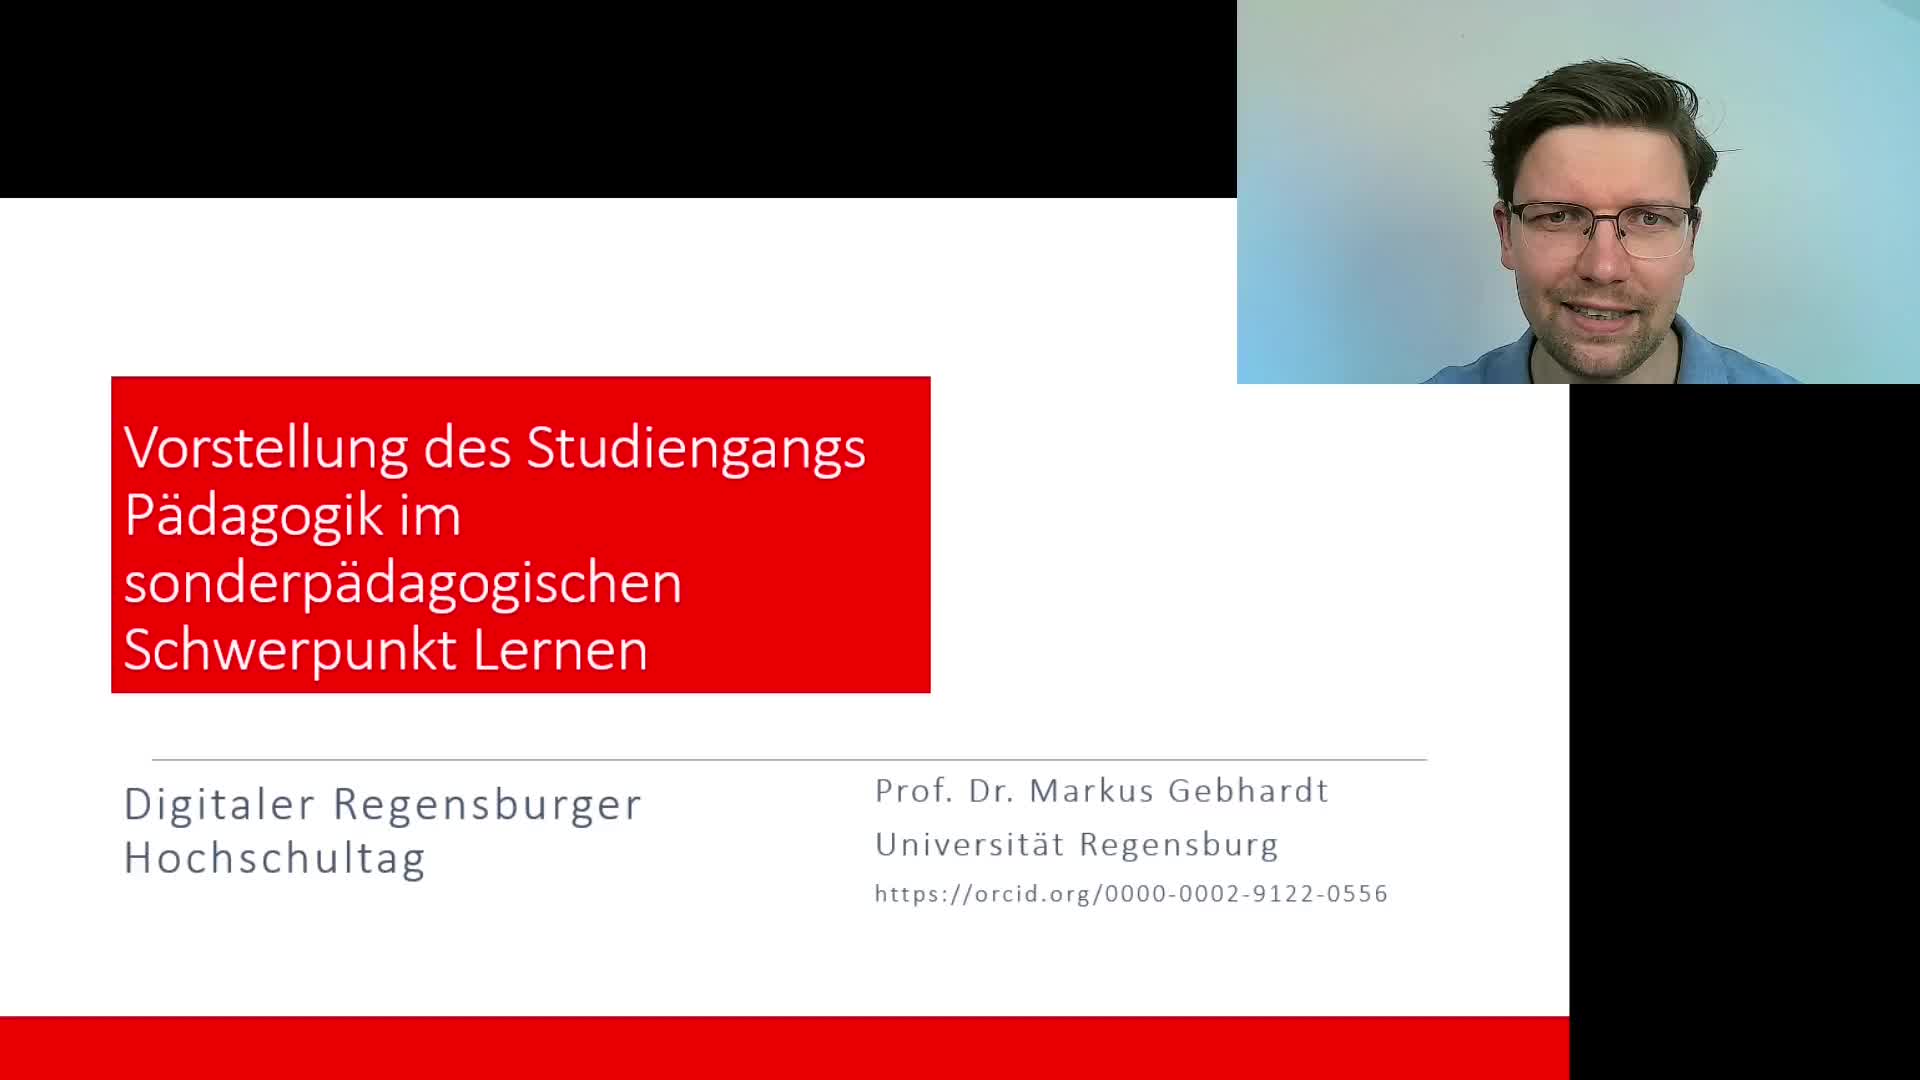 Vorstellung des Studiengangs LA Sonderpädagogik "Pädagogik im sonderpädagogischen Schwerpunkt Lernen" (Digitaler Regensburger Hochschultag)